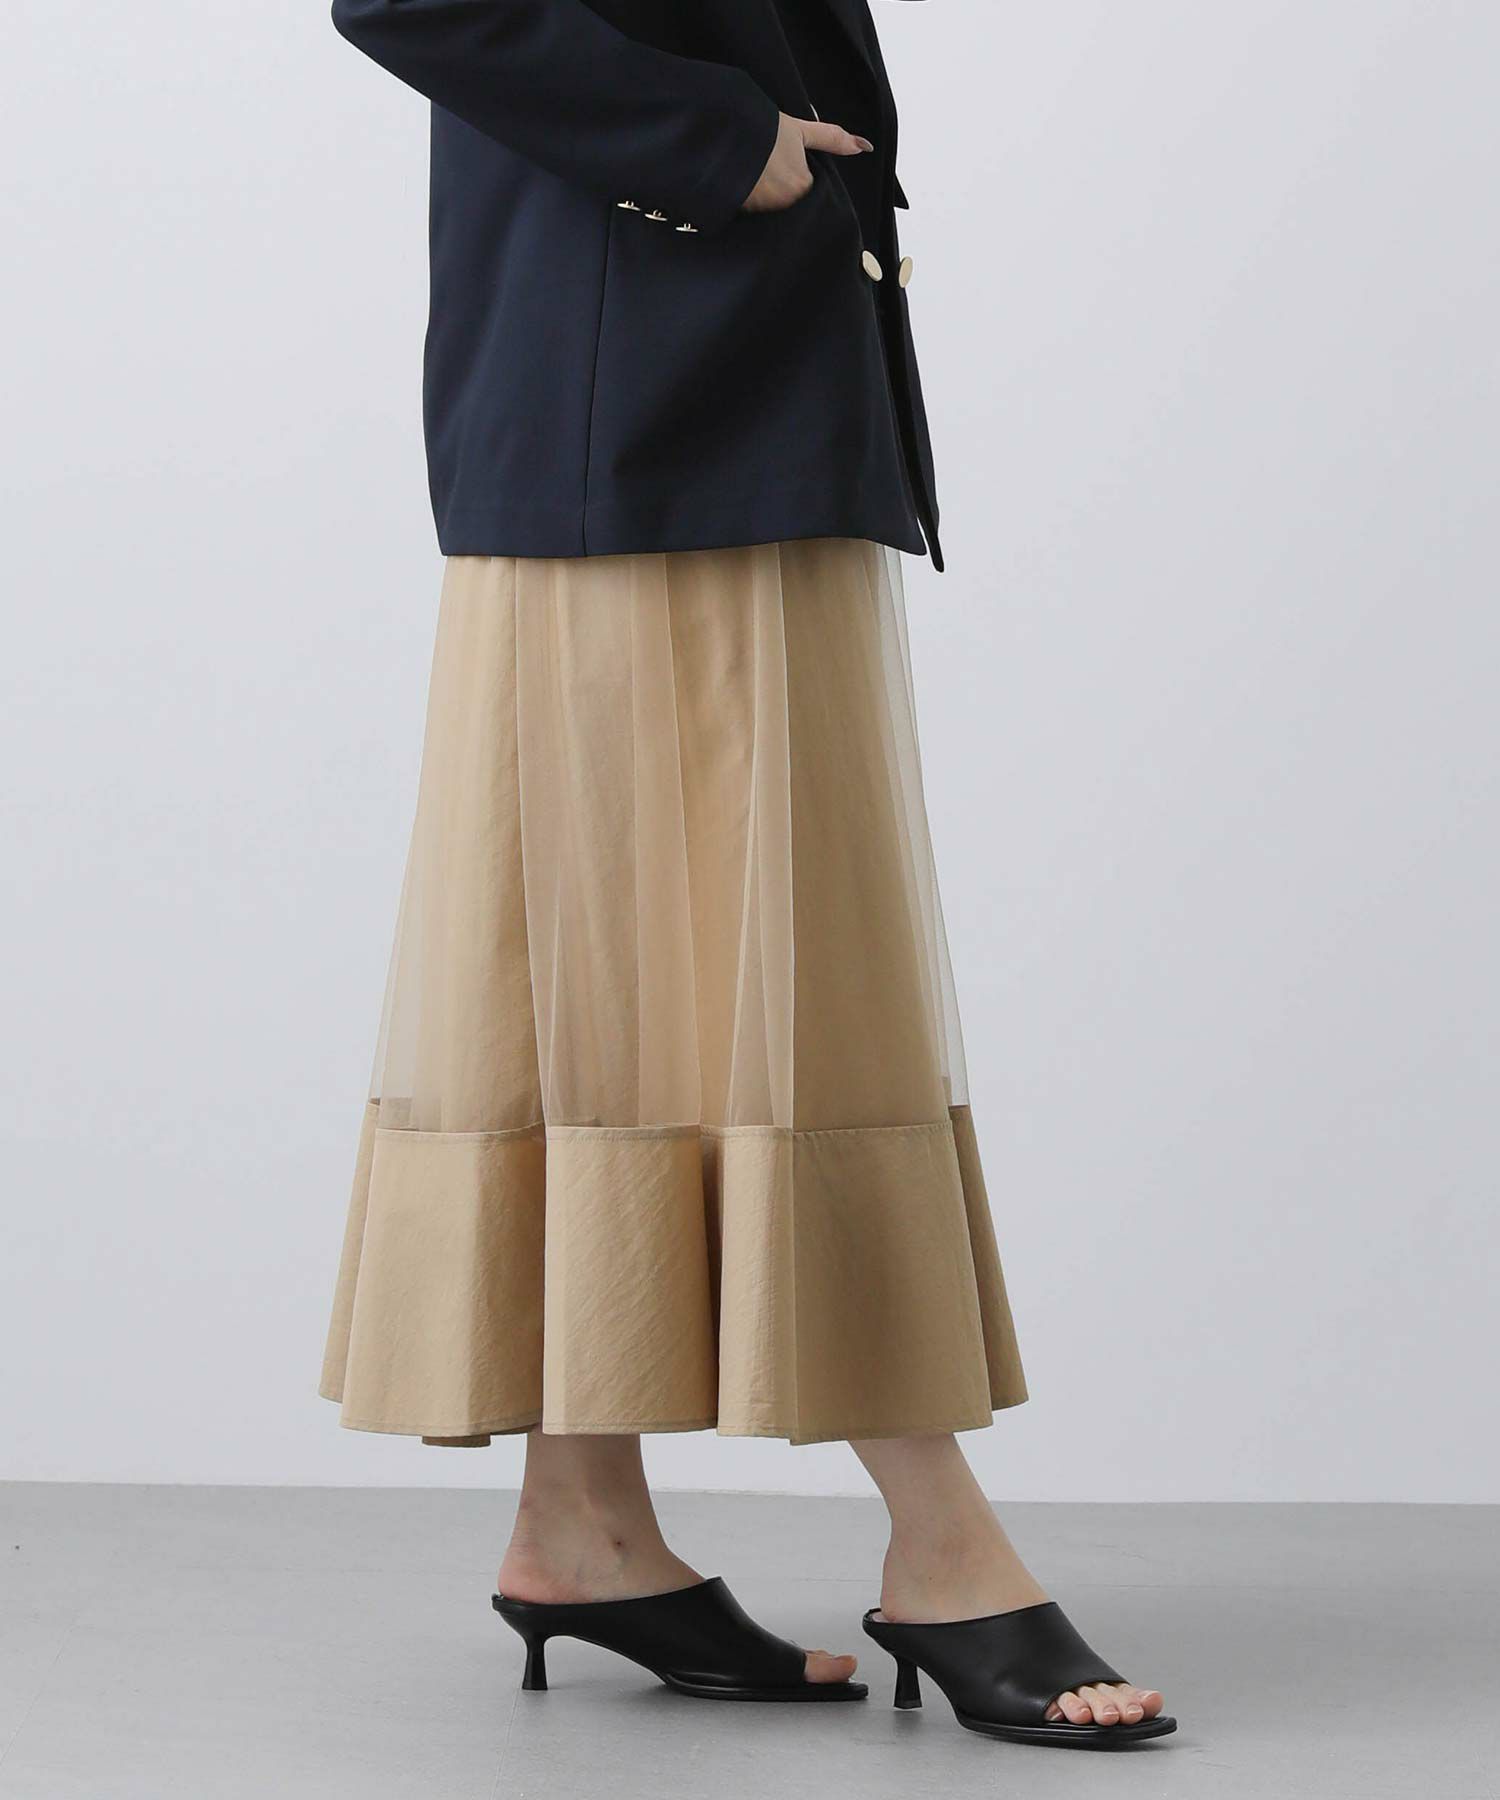 Gready Brilliantギャザーチュール裾切替スカート | SEKIMIKI Online